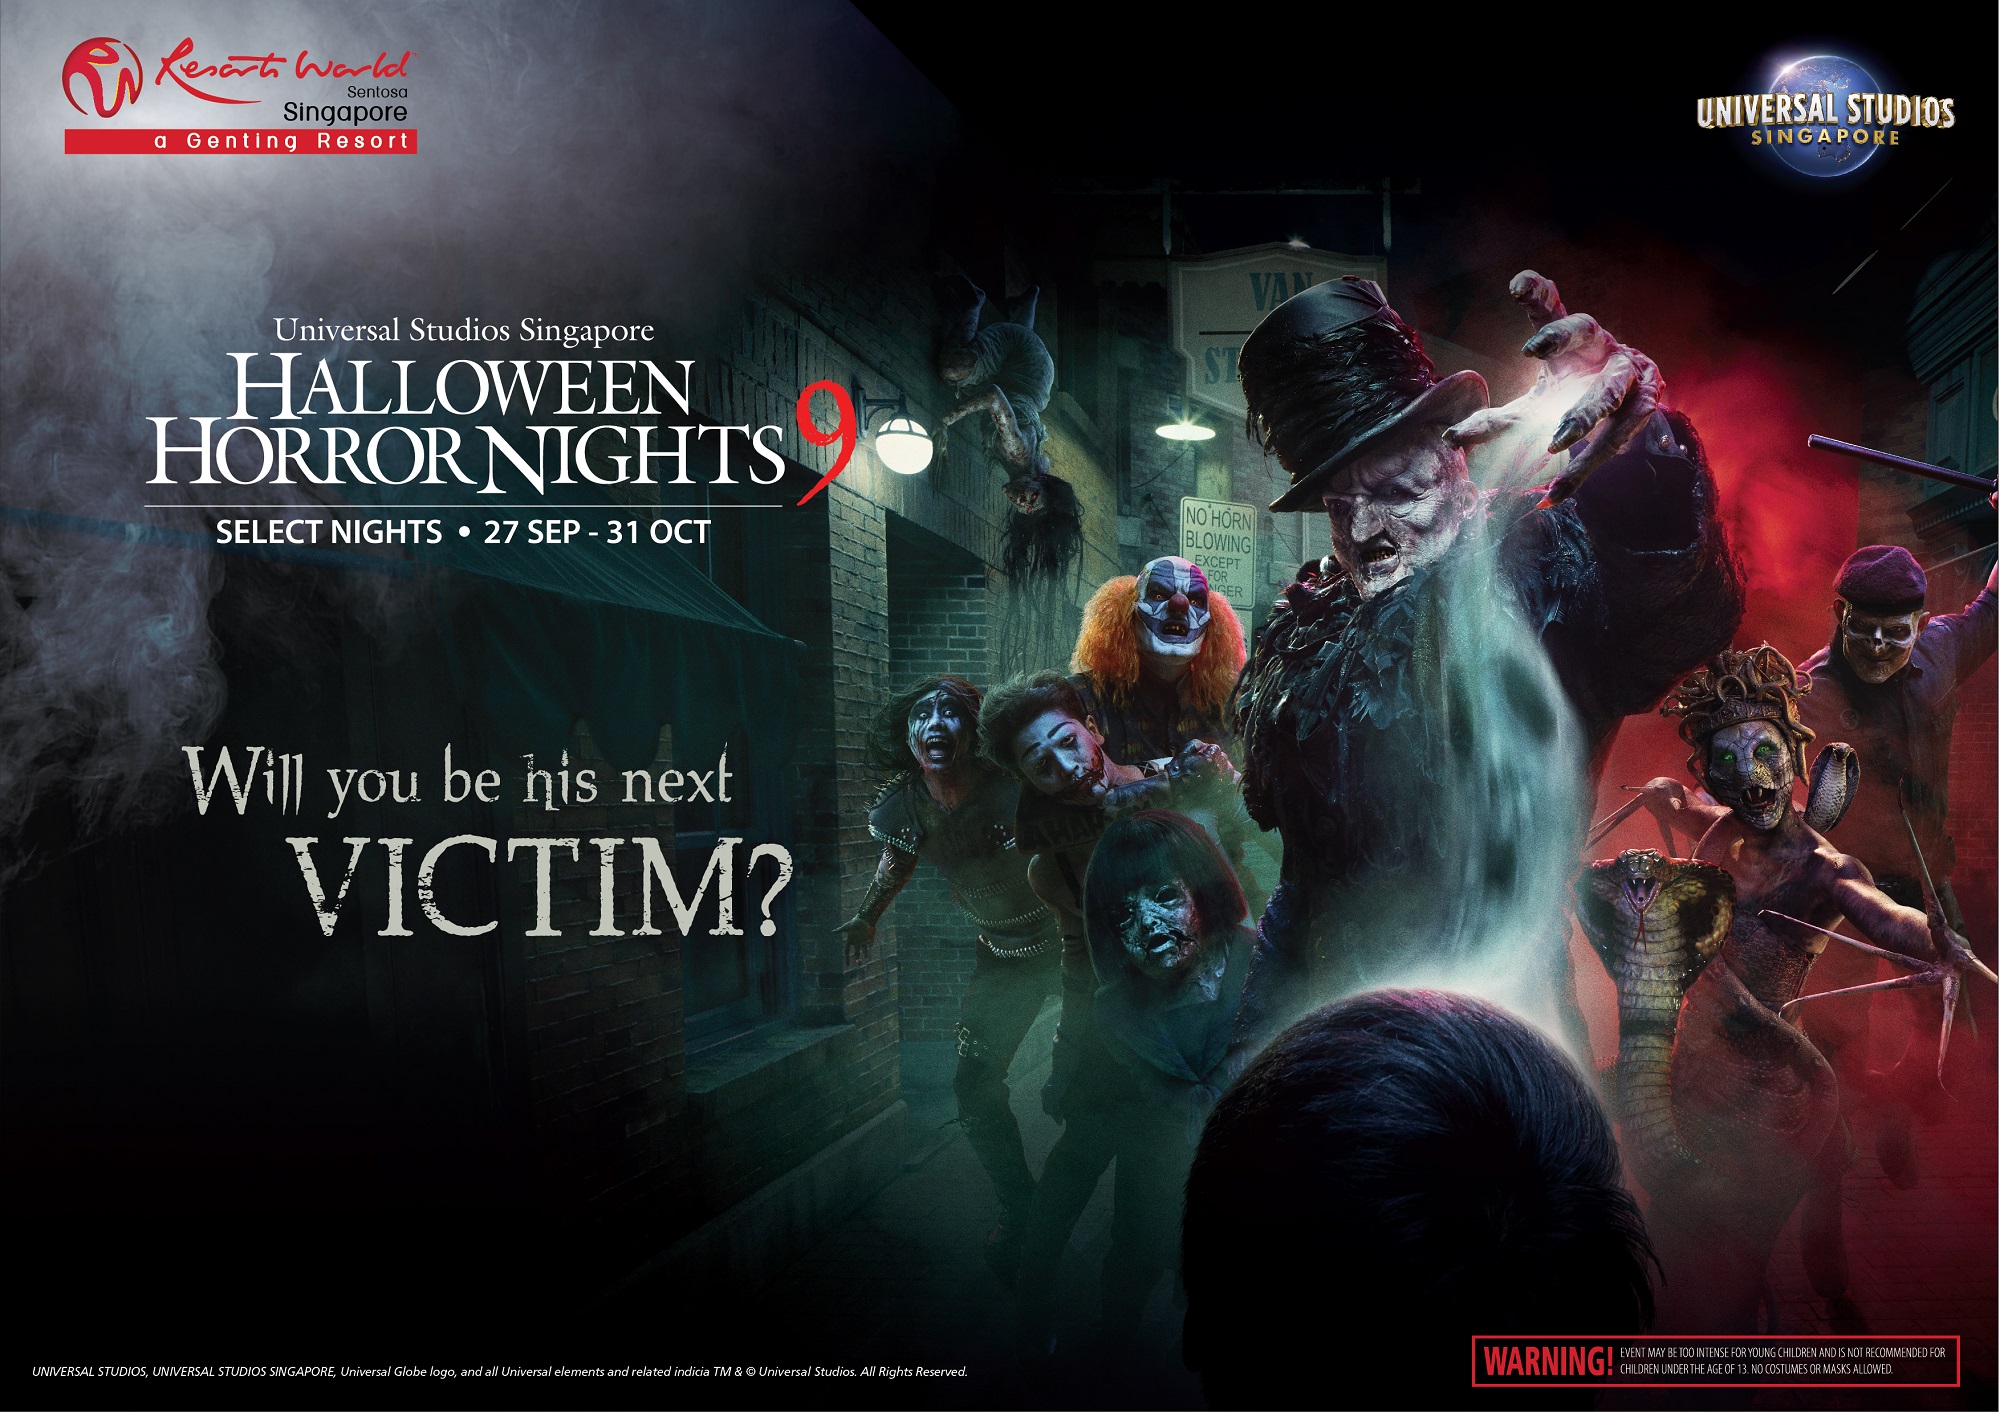 Universal Studios Singapore's Halloween Horror Nights returns for 9th